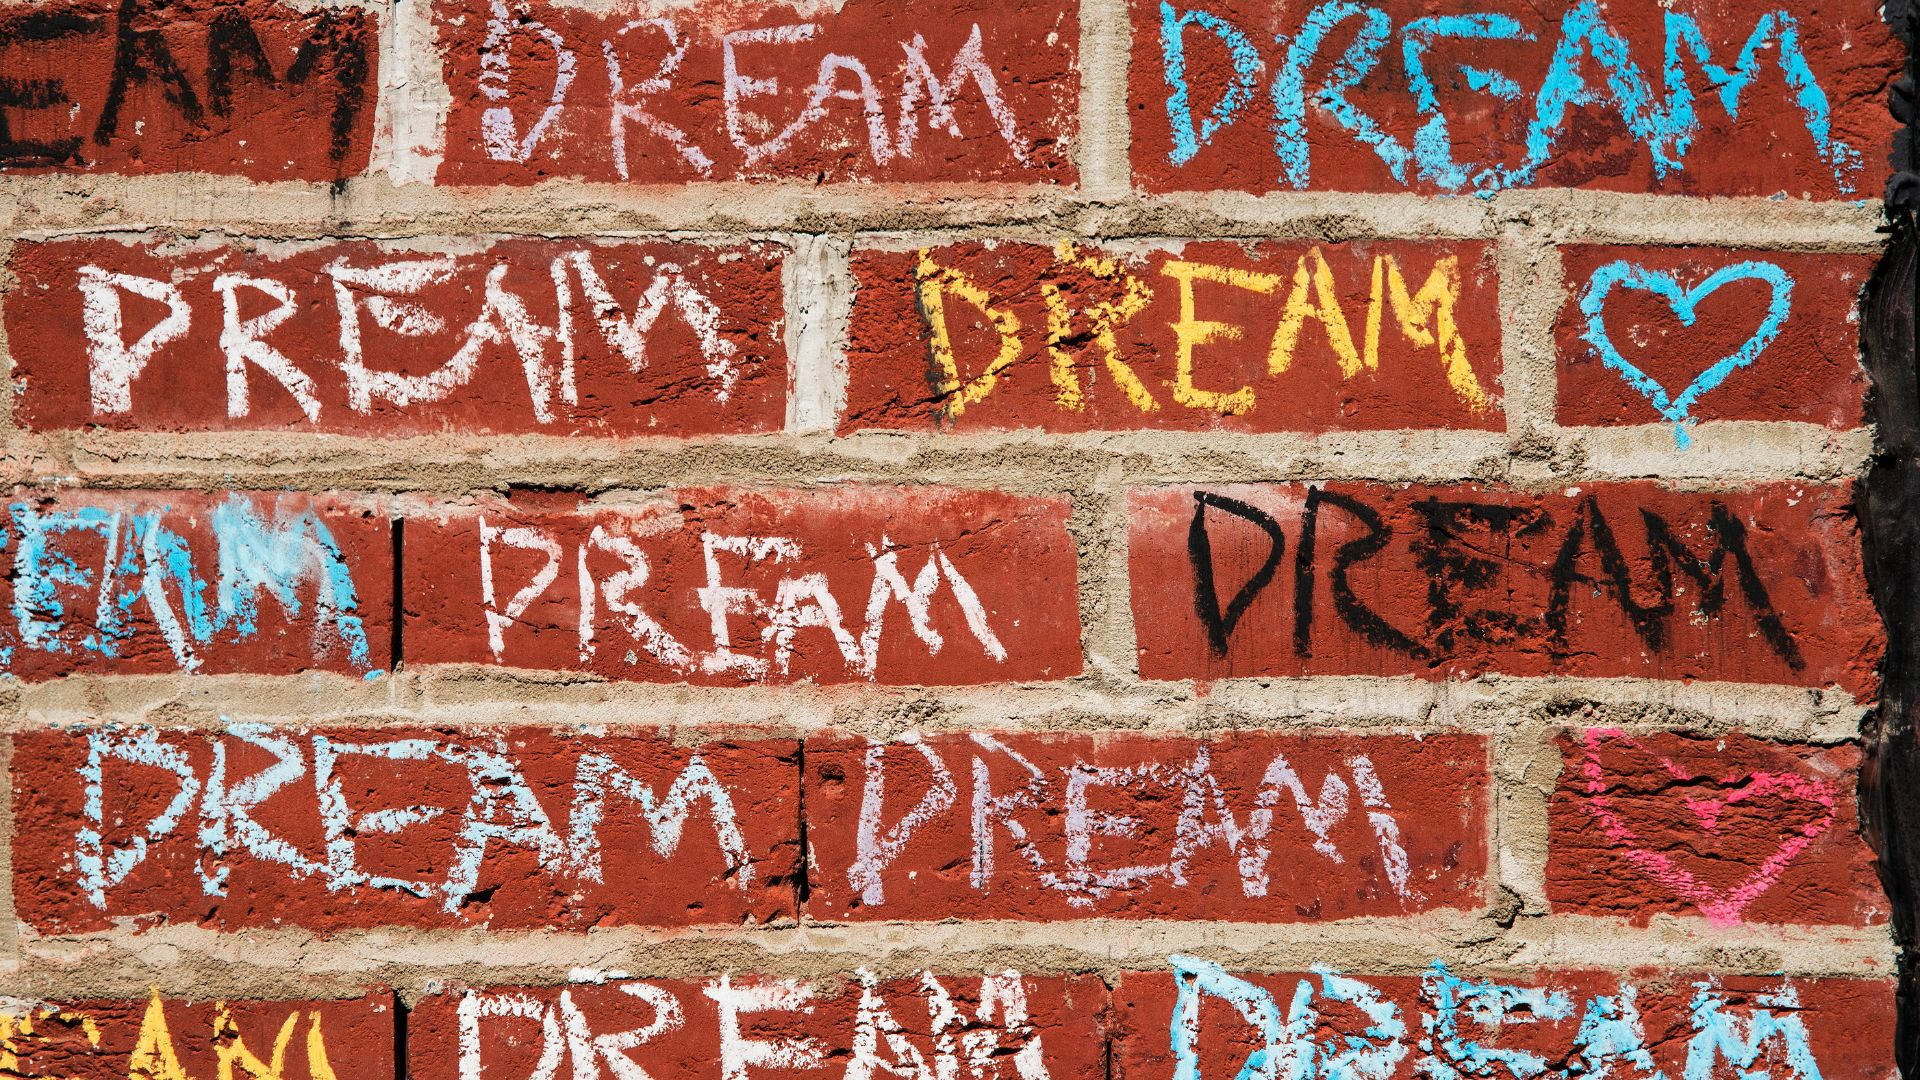 Caption: "Word Written on Brick Wall" Wallpaper